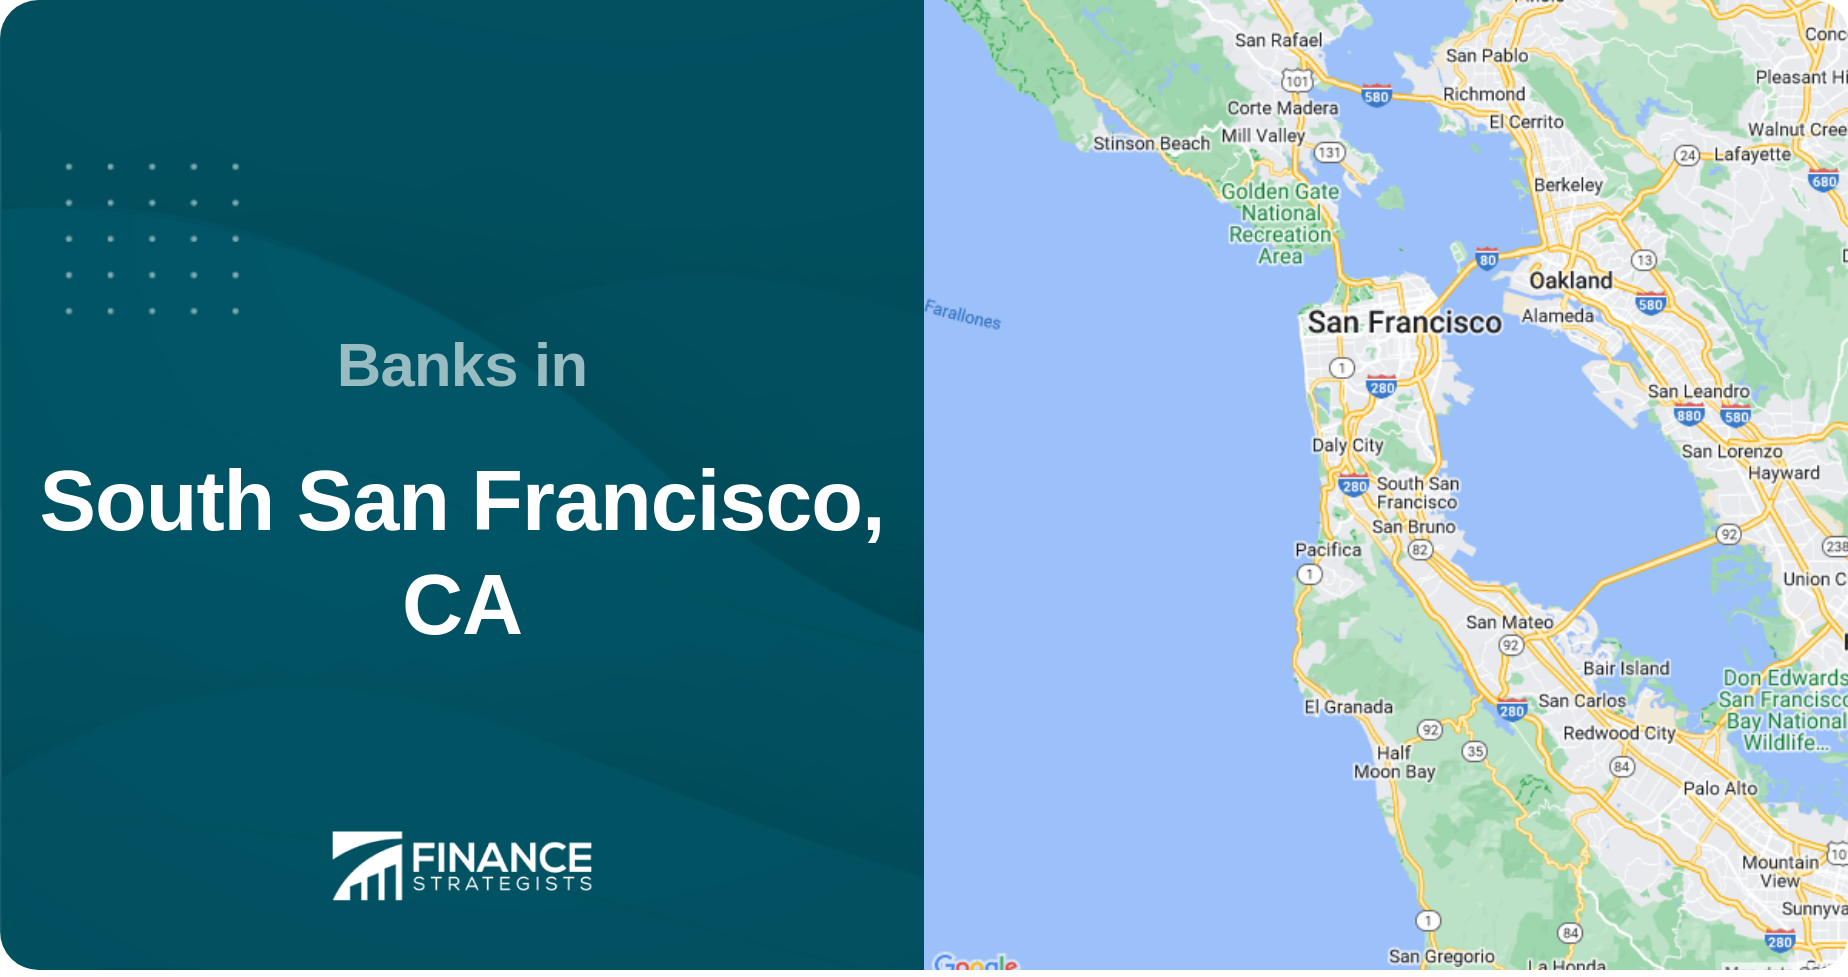 Banks in South San Francisco, CA